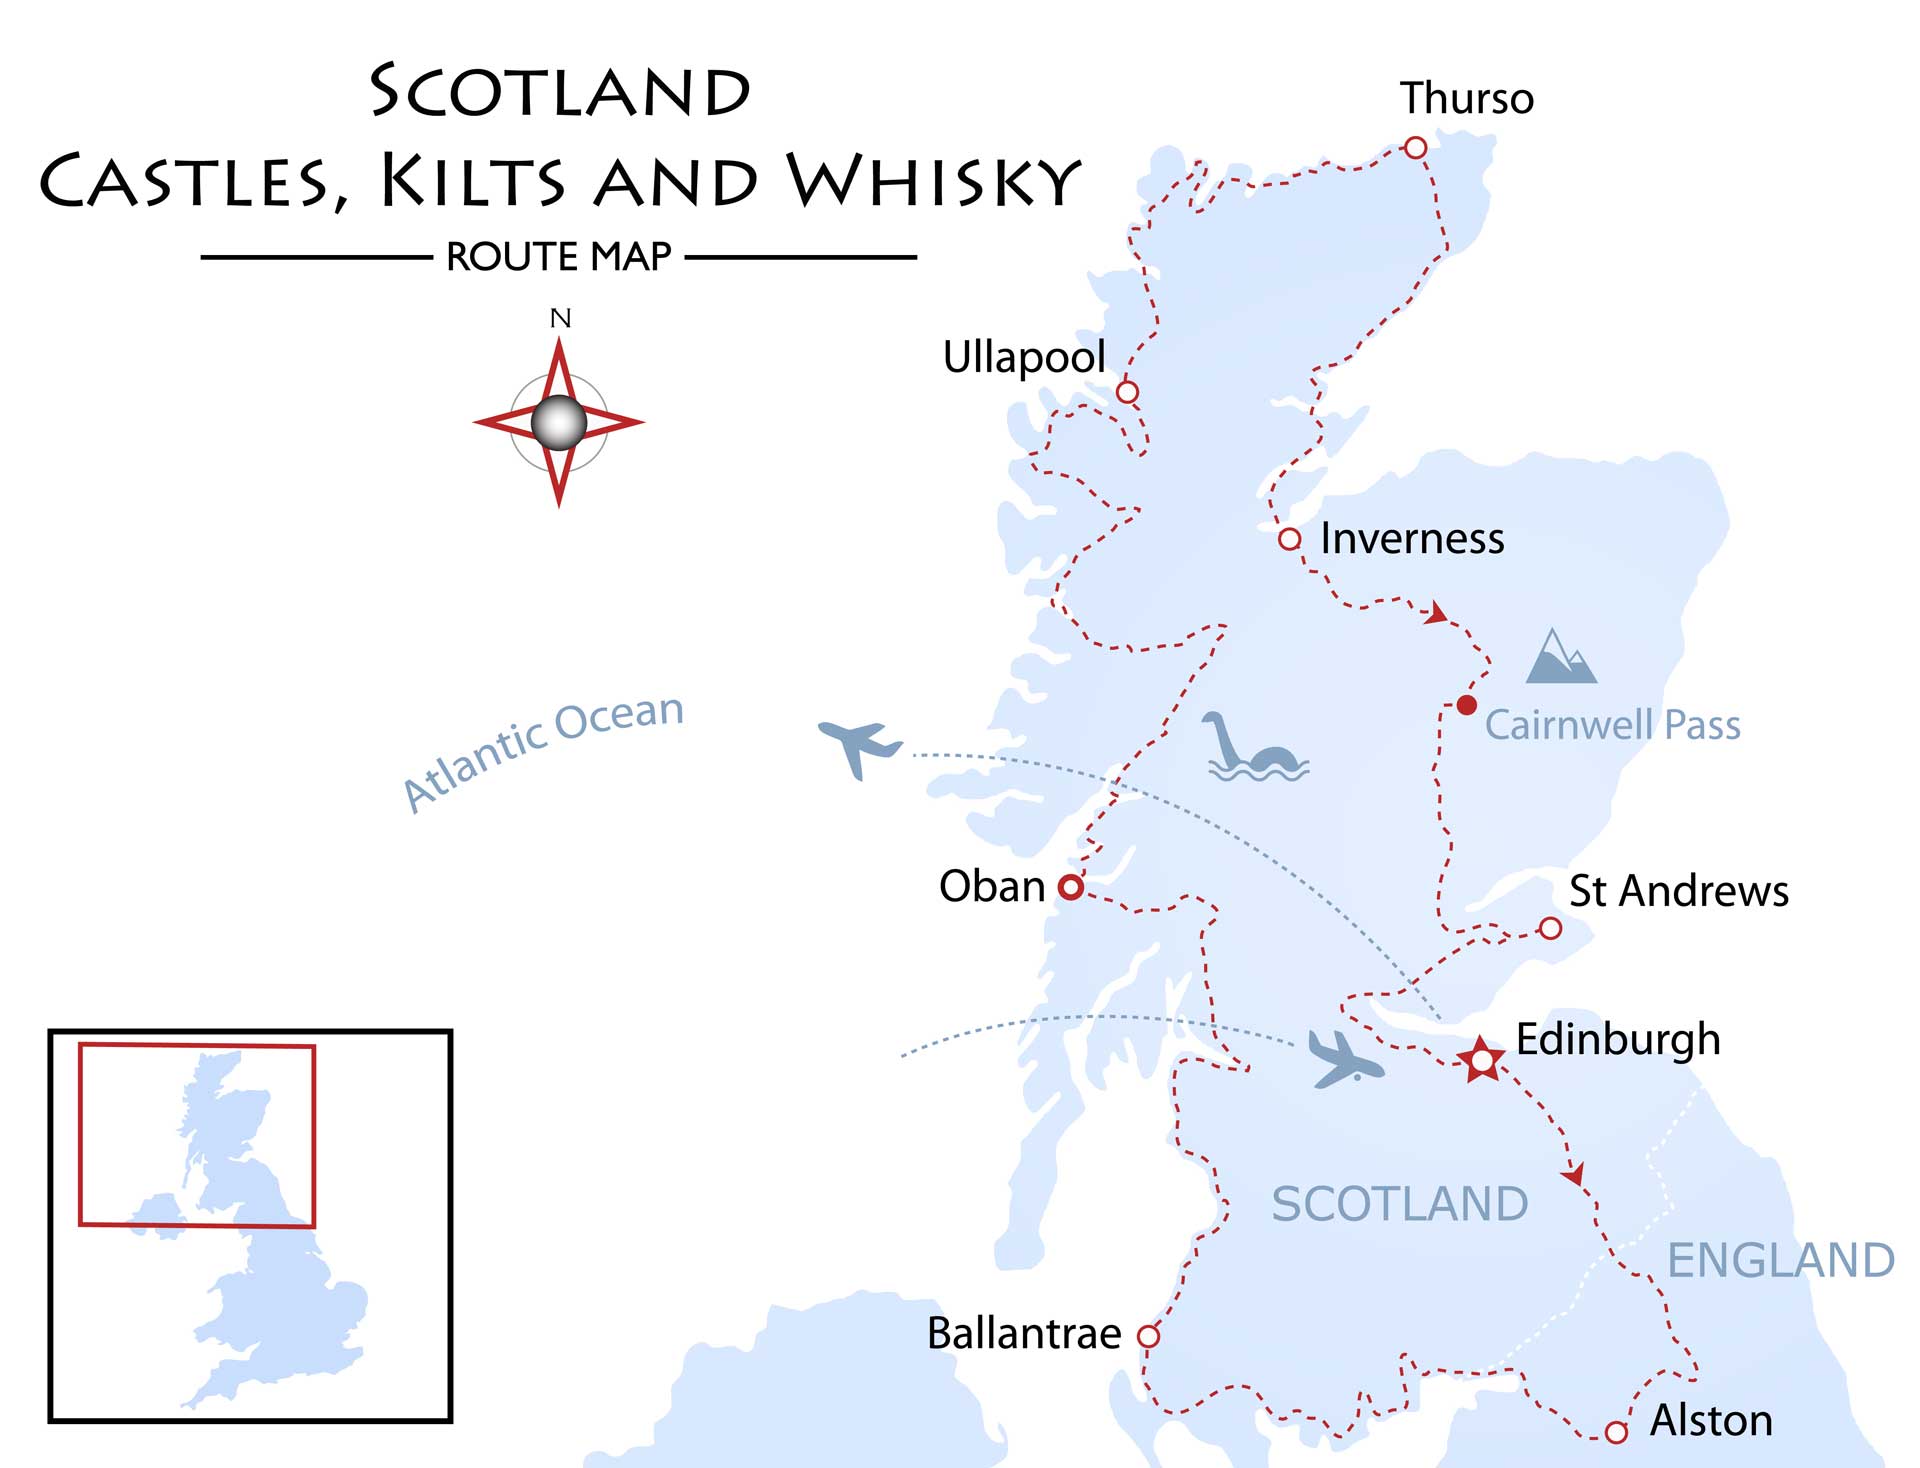 Scotland - Castles, Kilts and Whisky Tour Map